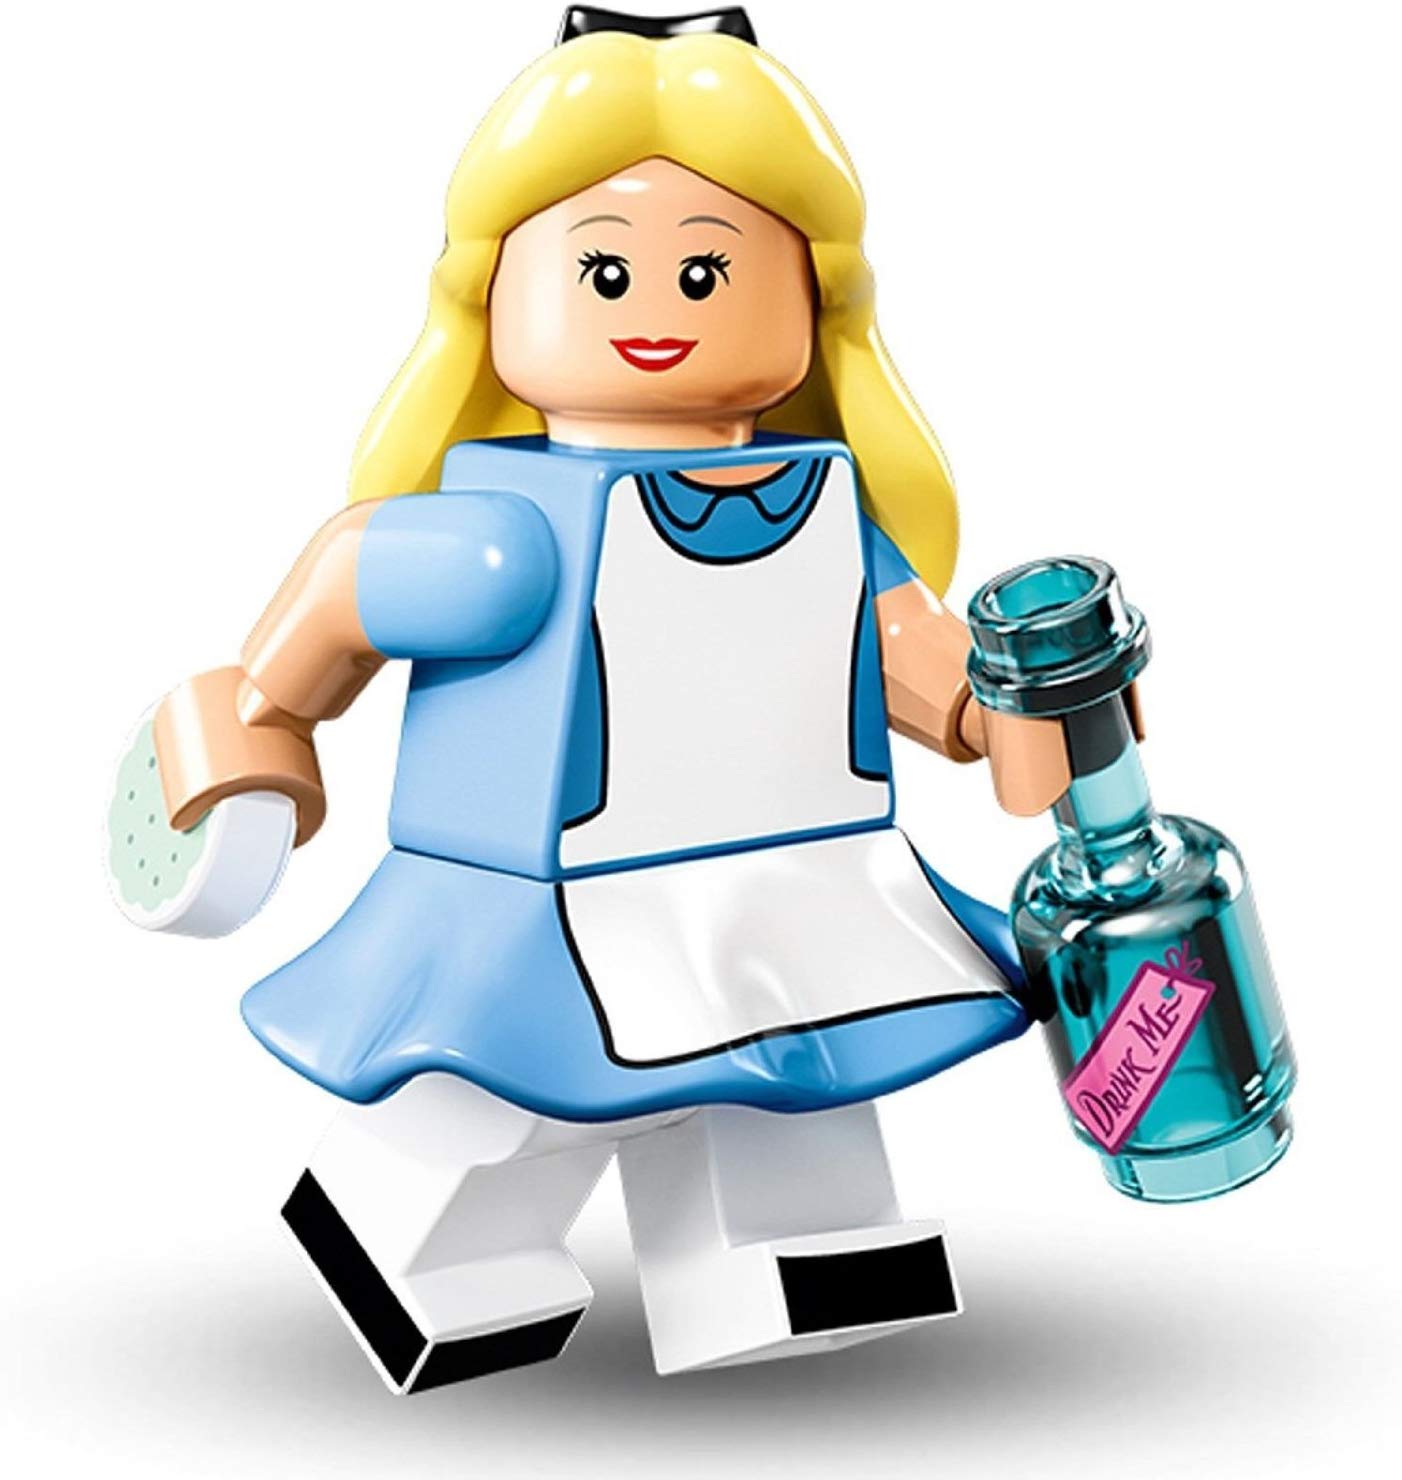 Lego Disney Series 16 Collectible Minif Igure – Alice In Wonderland (71012)